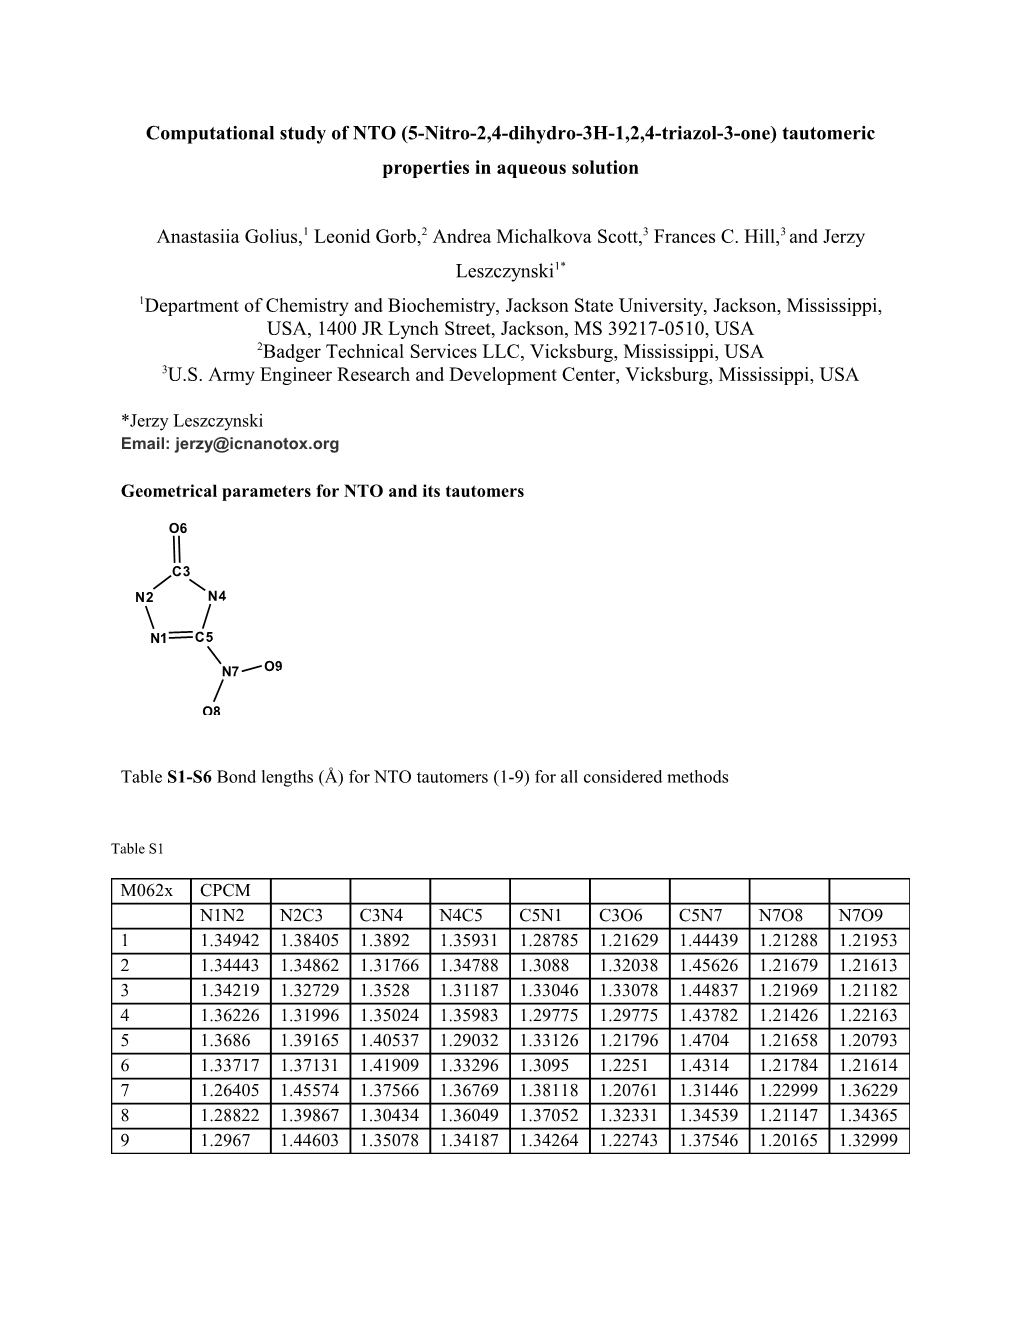 Computational Study of NTO (5-Nitro-2,4-Dihydro-3H-1,2,4-Triazol-3-One) Tautomeric Properties